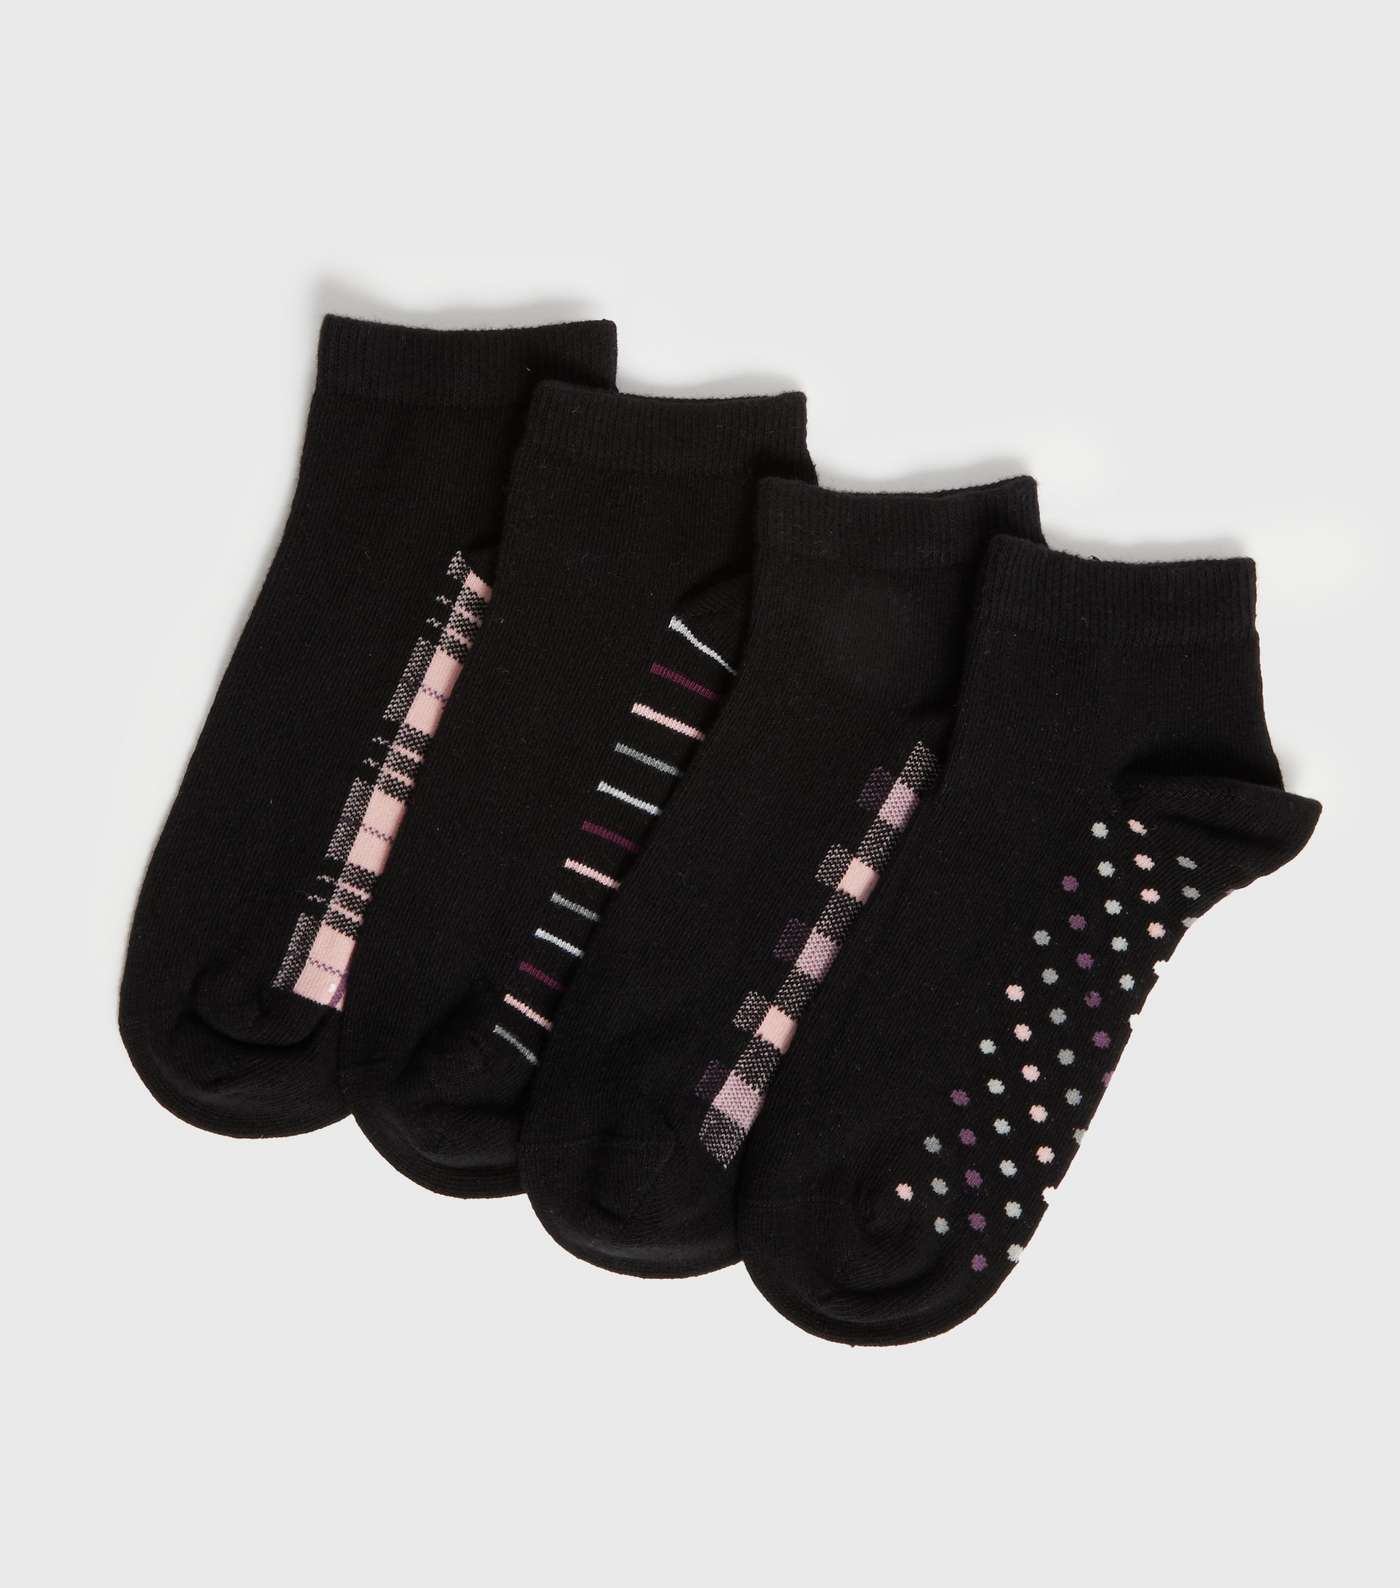 4 Pack Check Spot and Stripe Trainer Socks